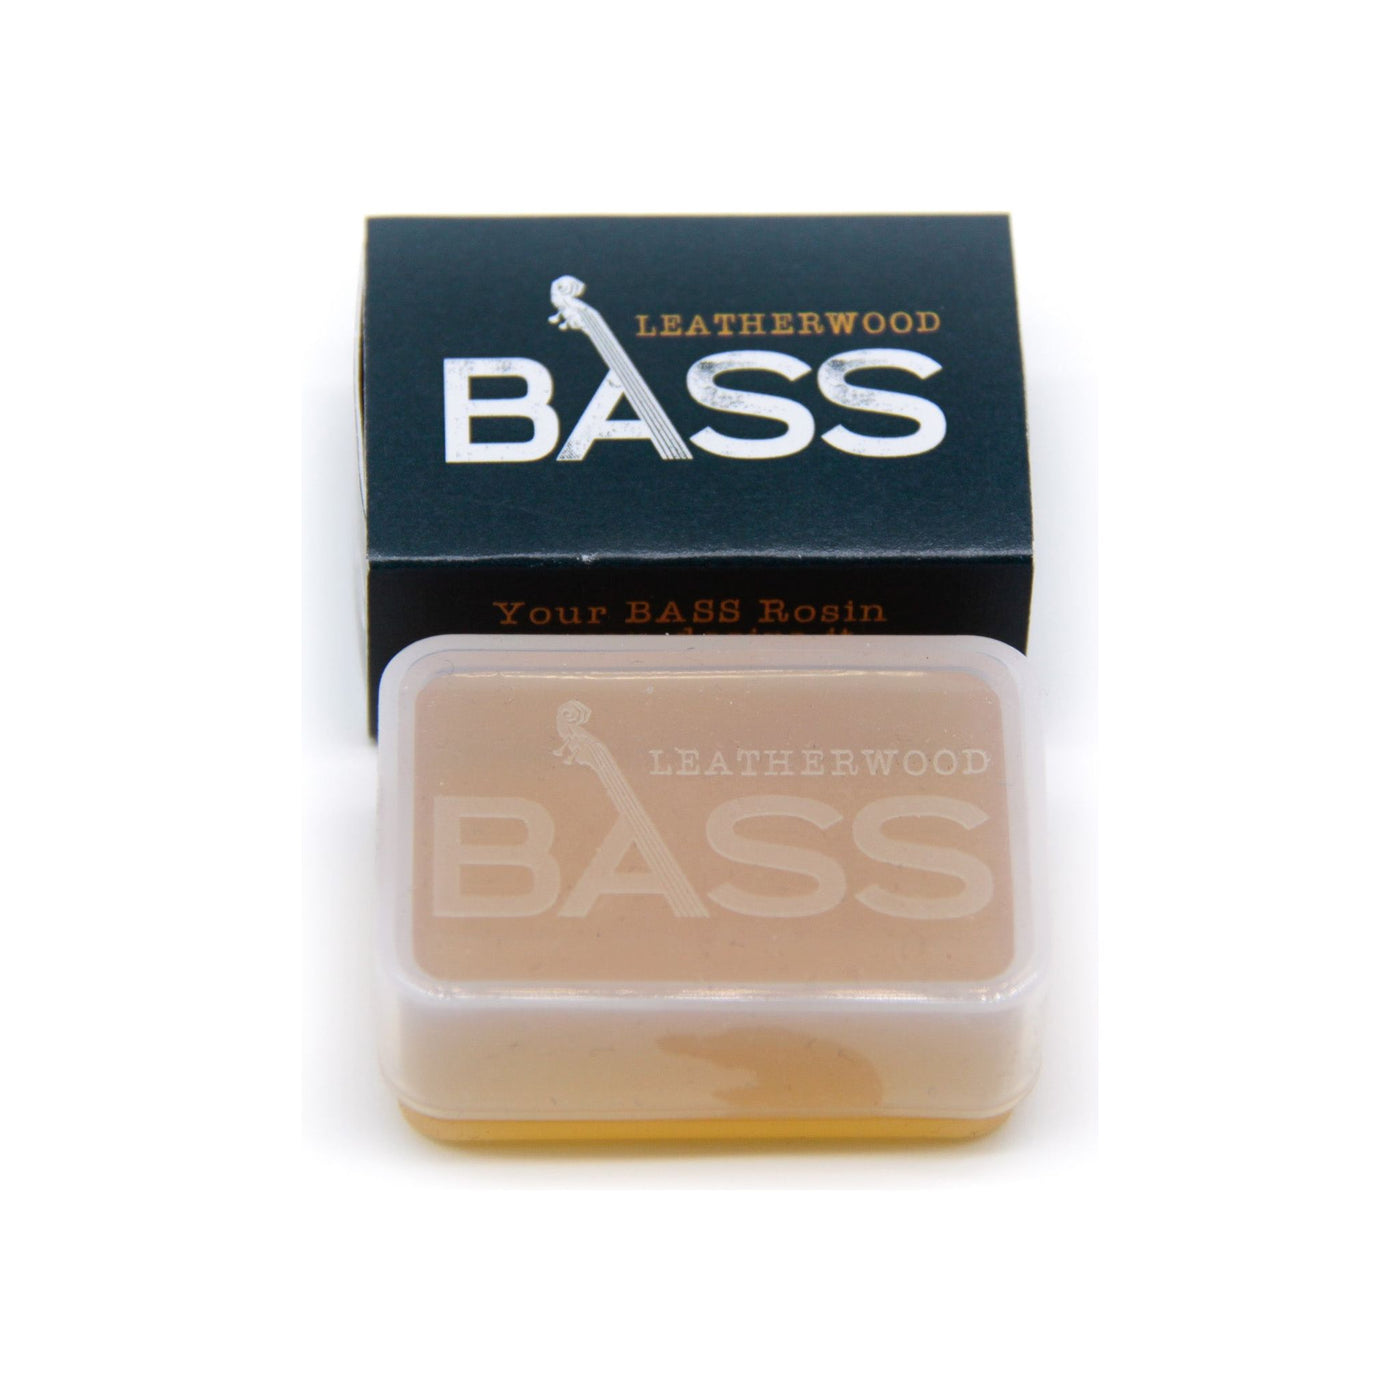 Leatherwood Bass & Bass Extra